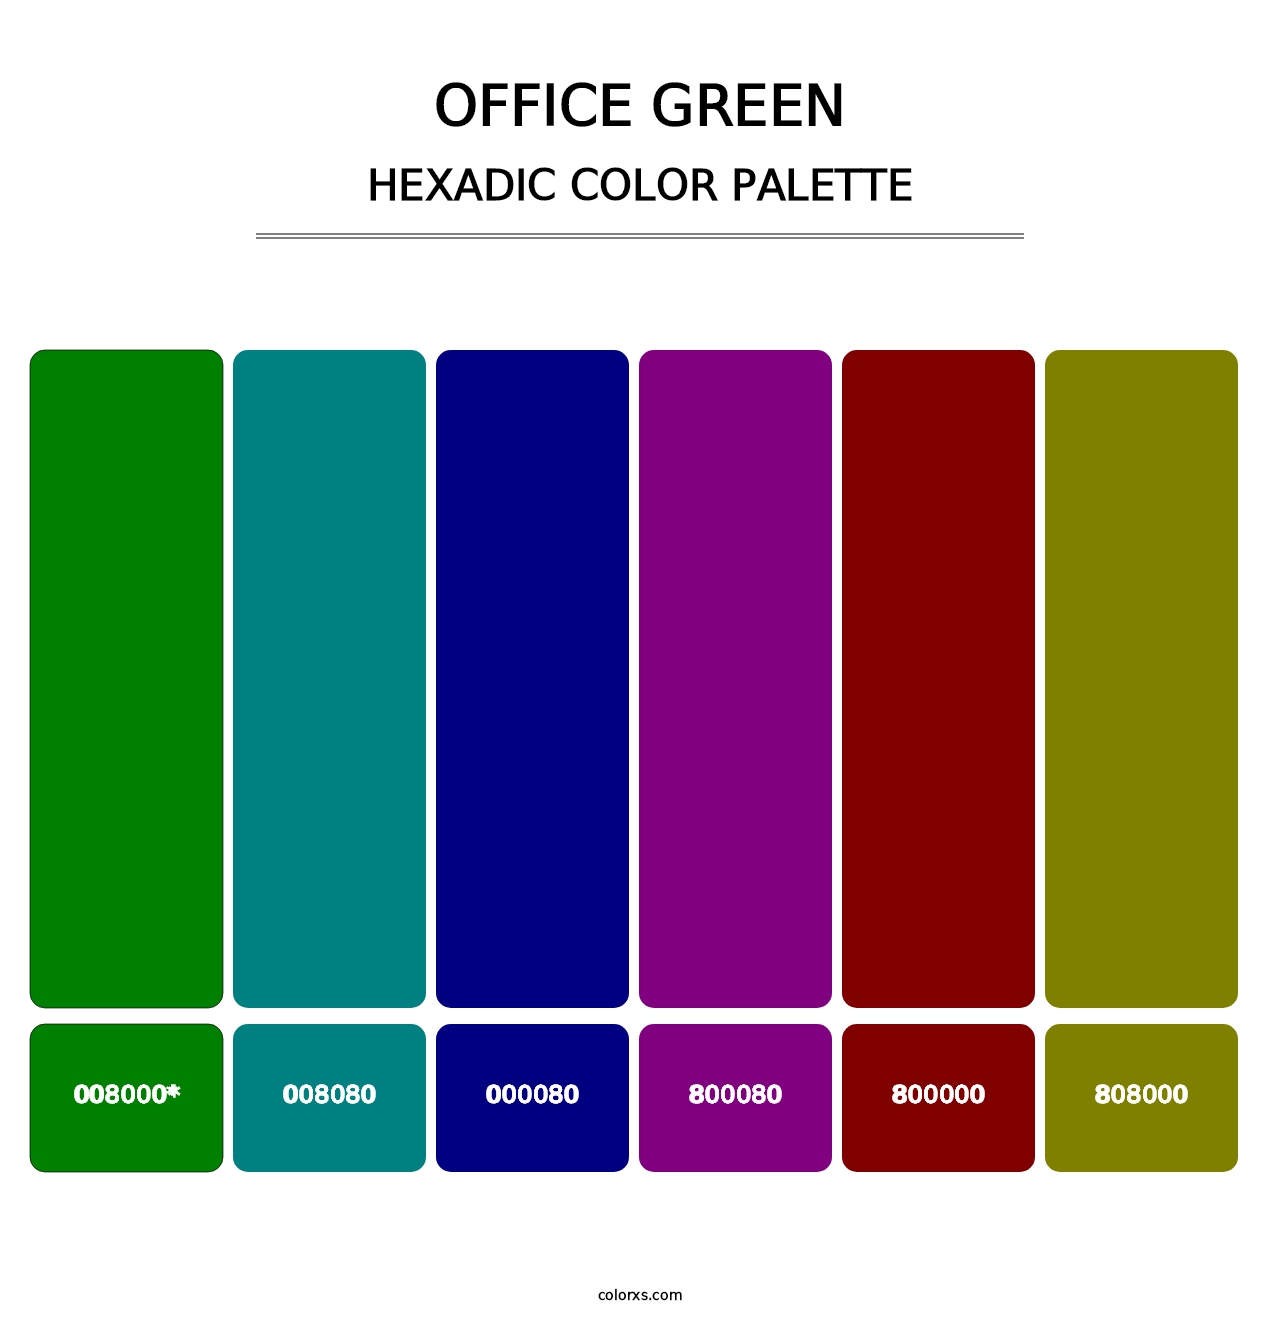 Office Green - Hexadic Color Palette